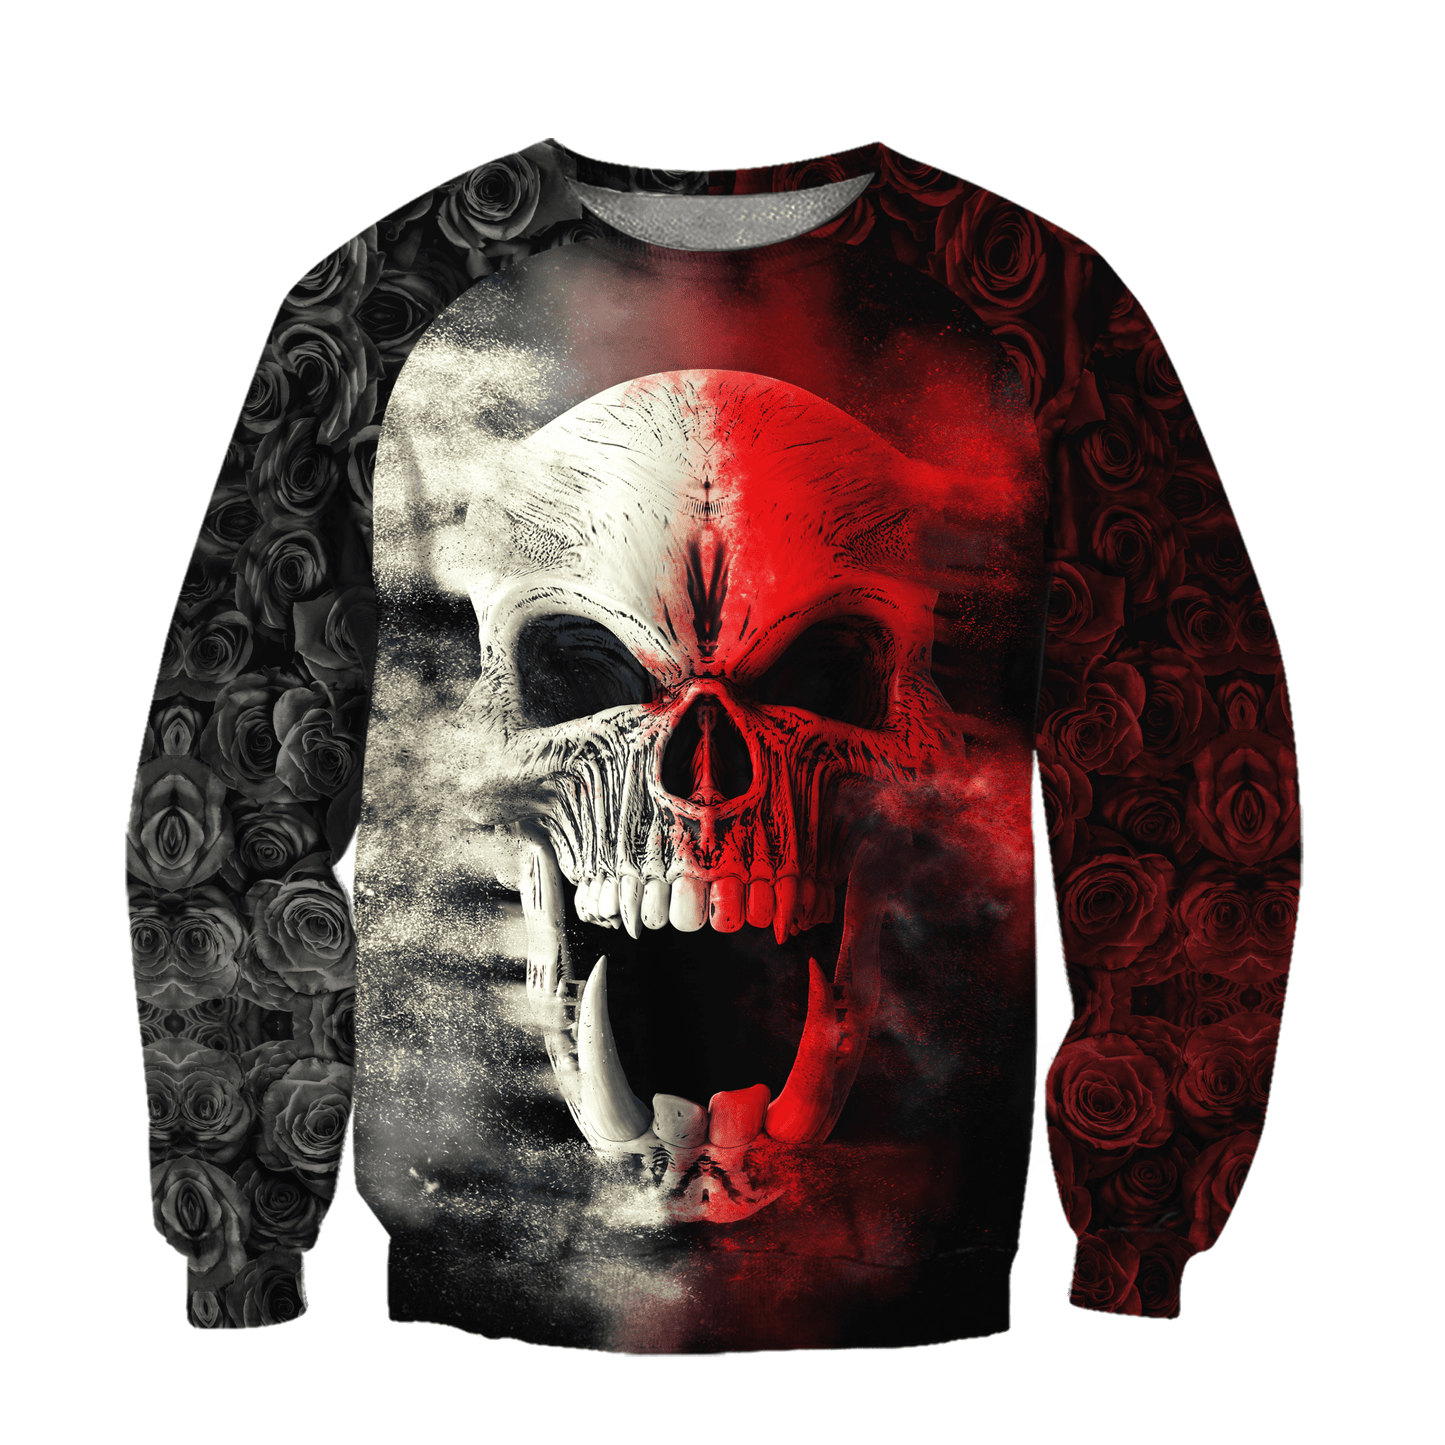 Dark Clould Skull Tattoo 3D All Over Printed Mens hoodies and Sweatshirt Autumn Unisex zipper Hoodie Casual Sportswear